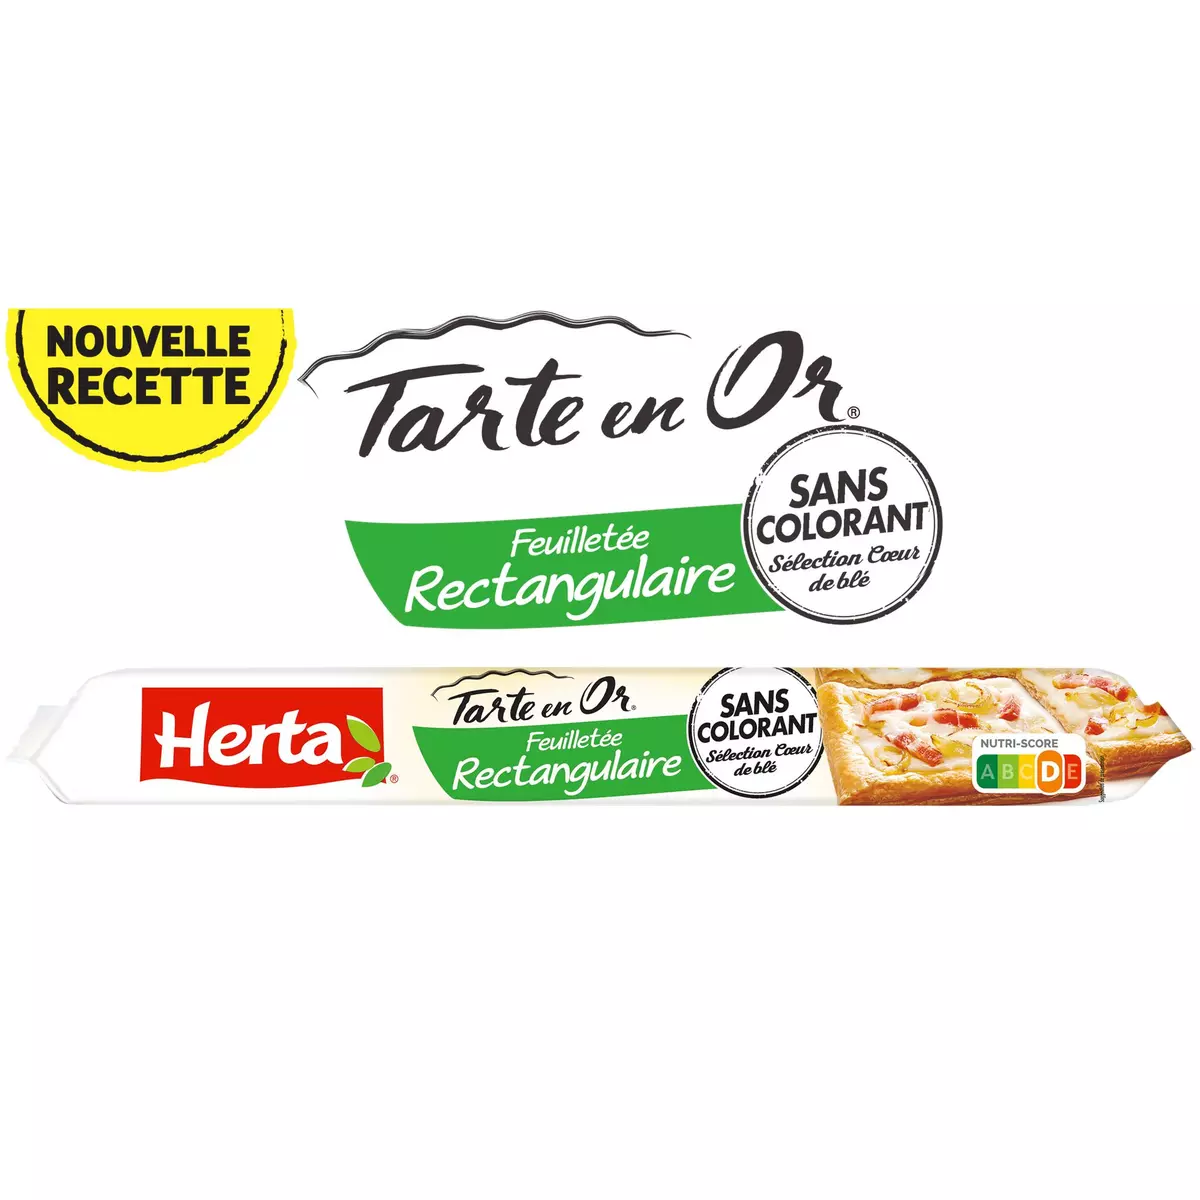 HERTA Tarte en Or pâte feuilletée rectangulaire 230g